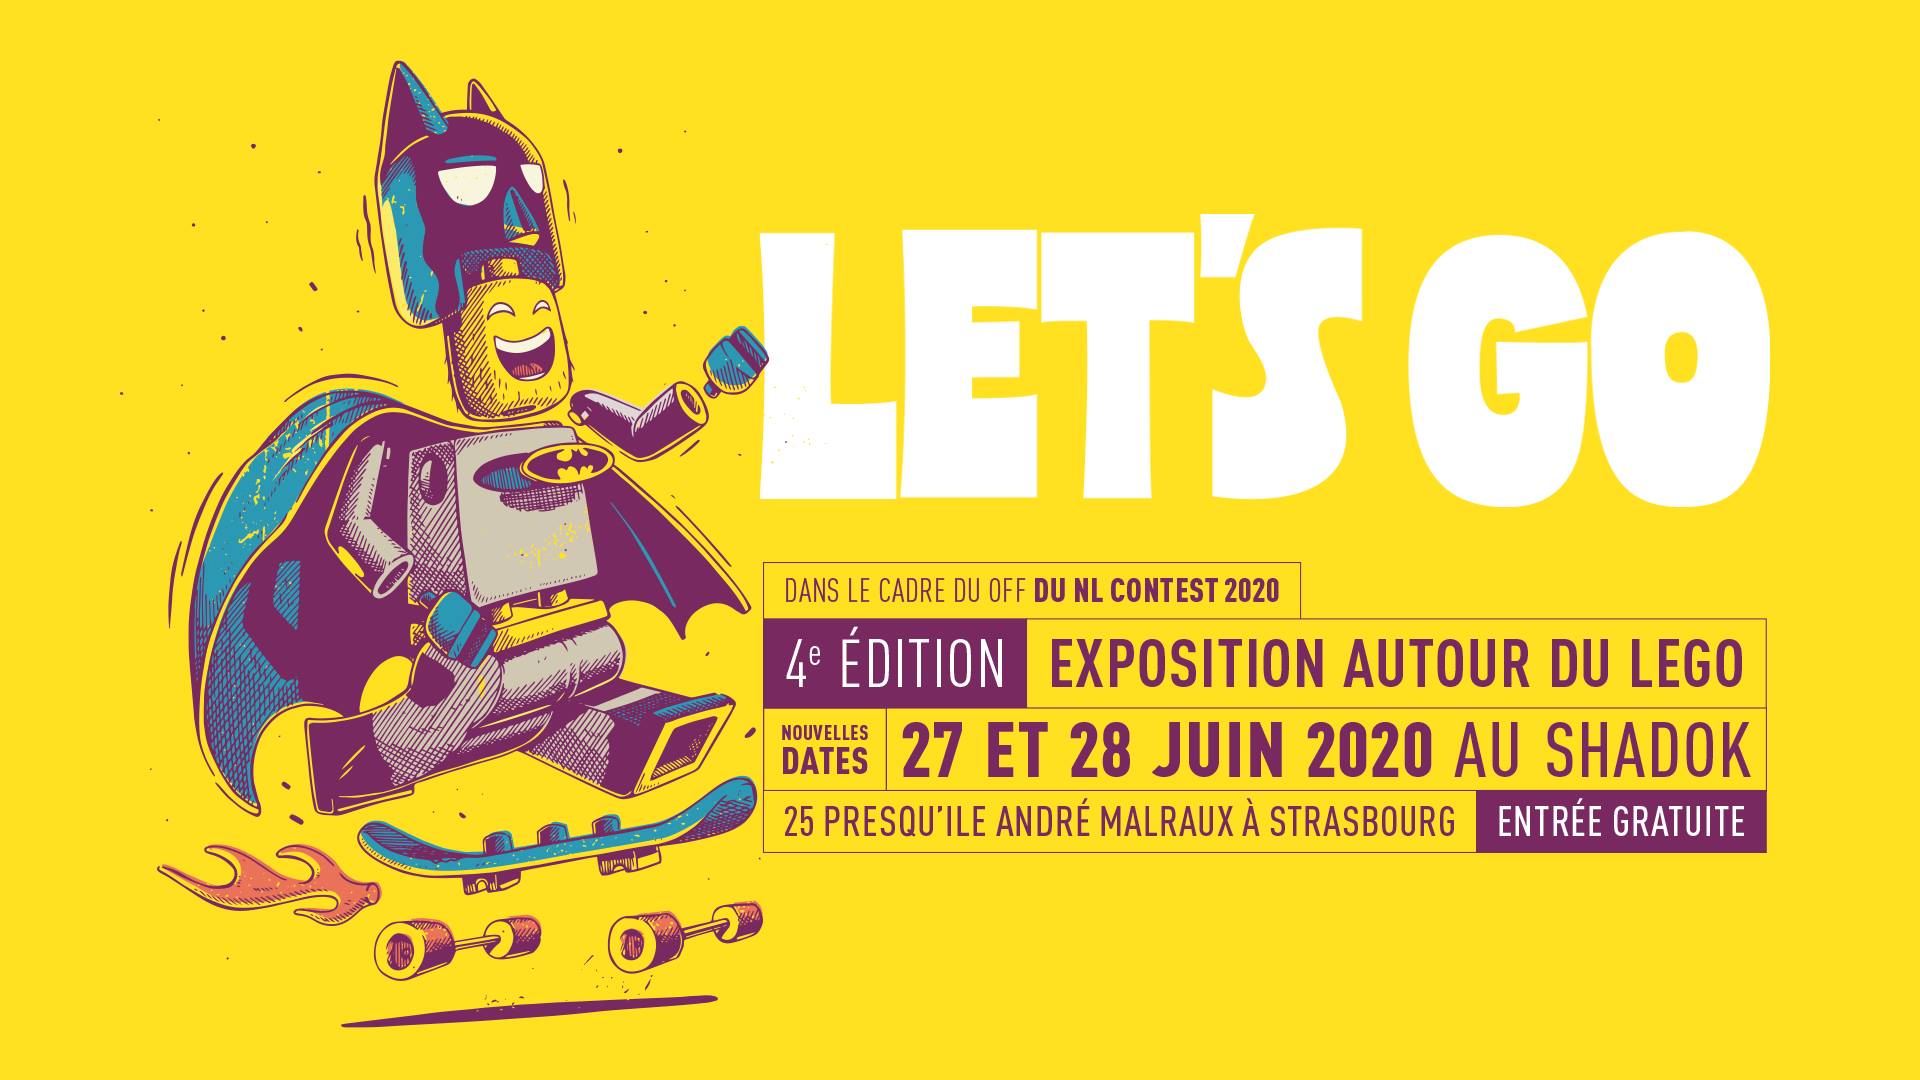 Expo Lego Let's Go - NL Contest - 2020 - Supacat, the Street Art Cat